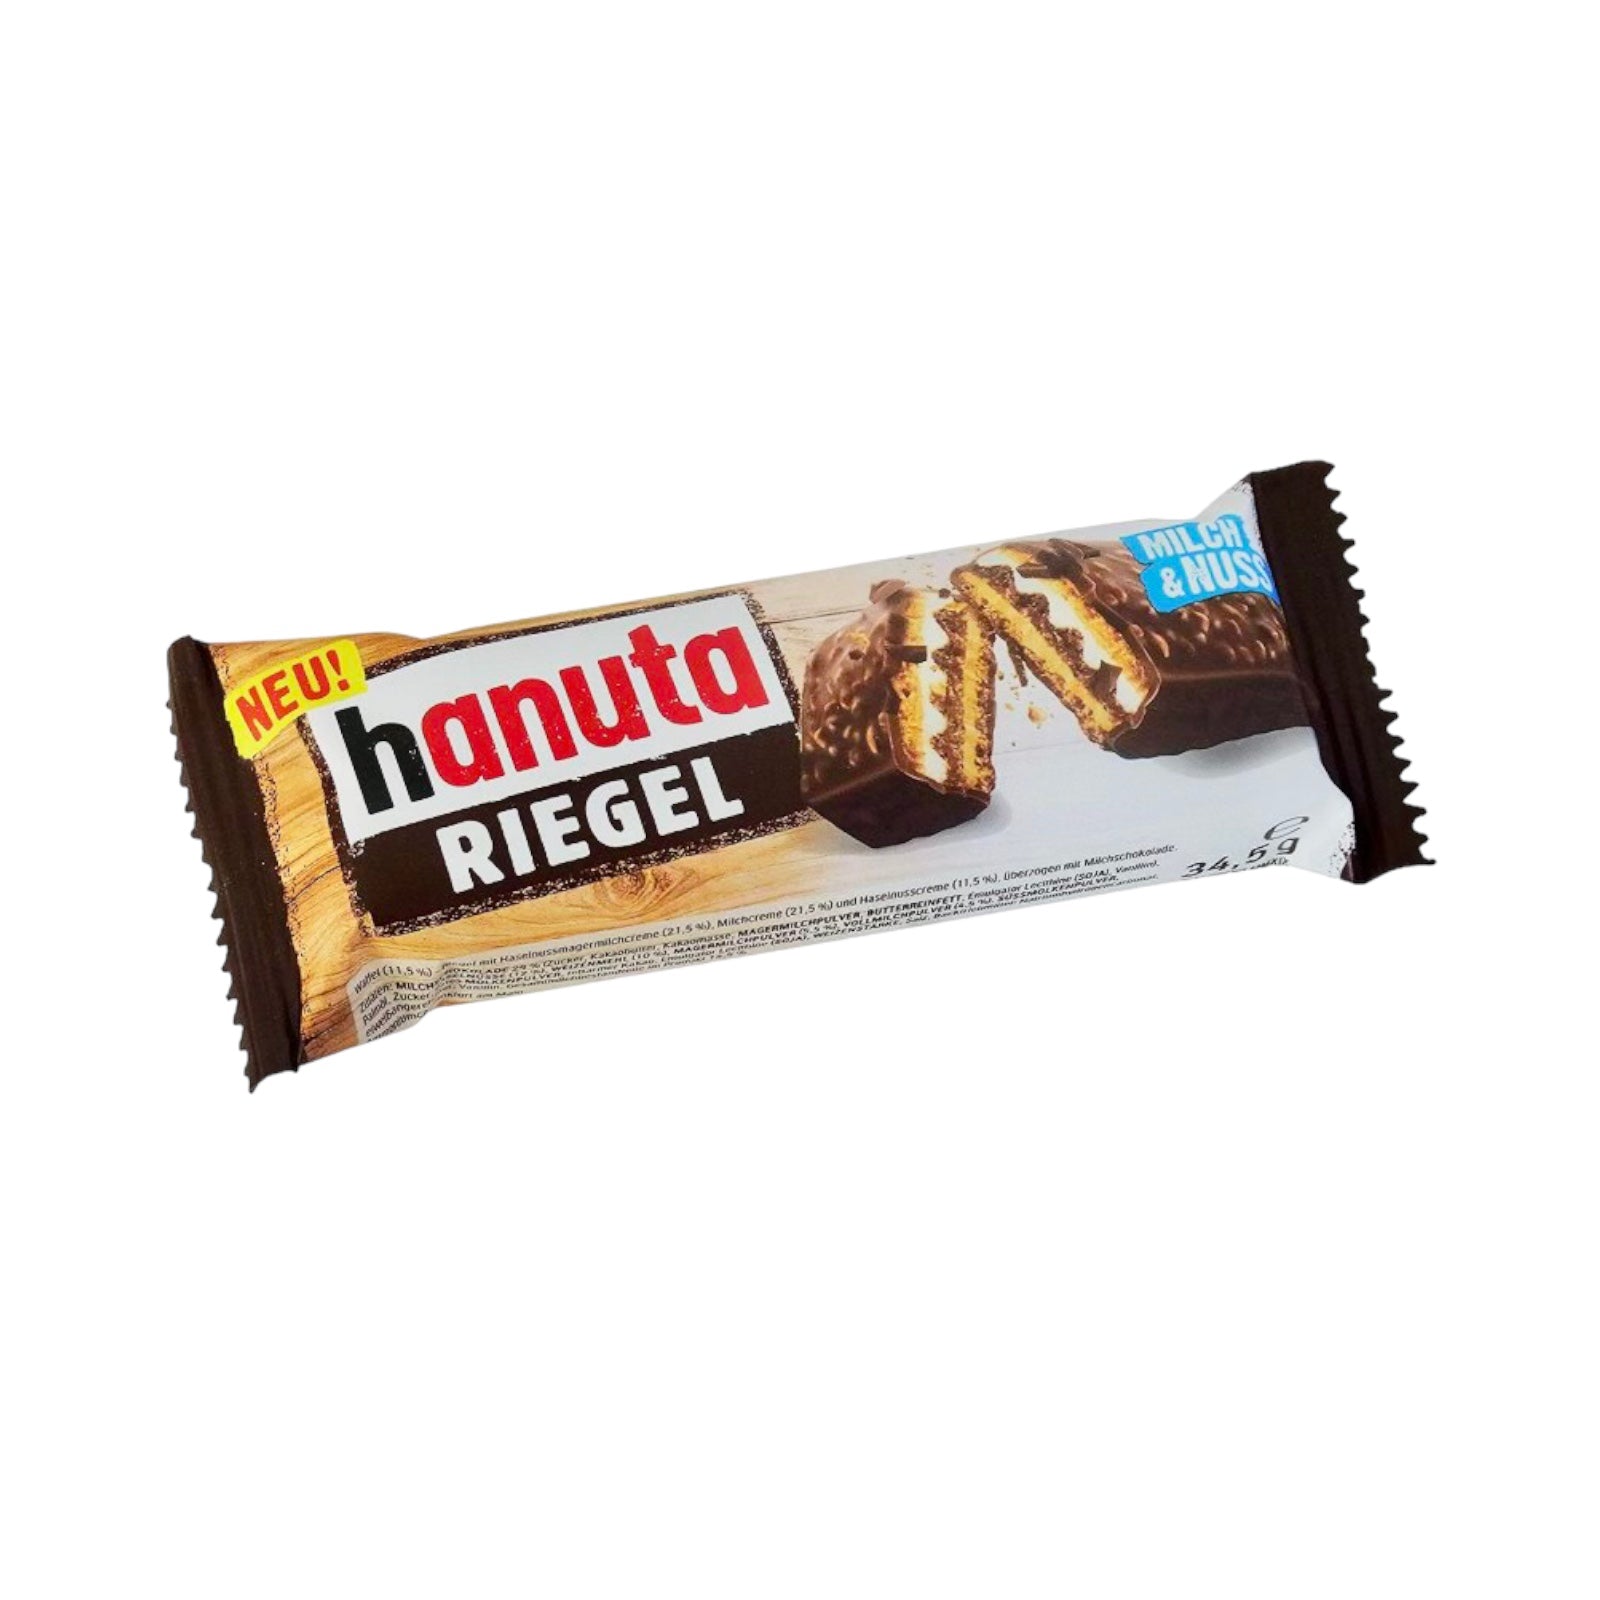 Ferrero Hanuta Riegel Covered With Chocolate